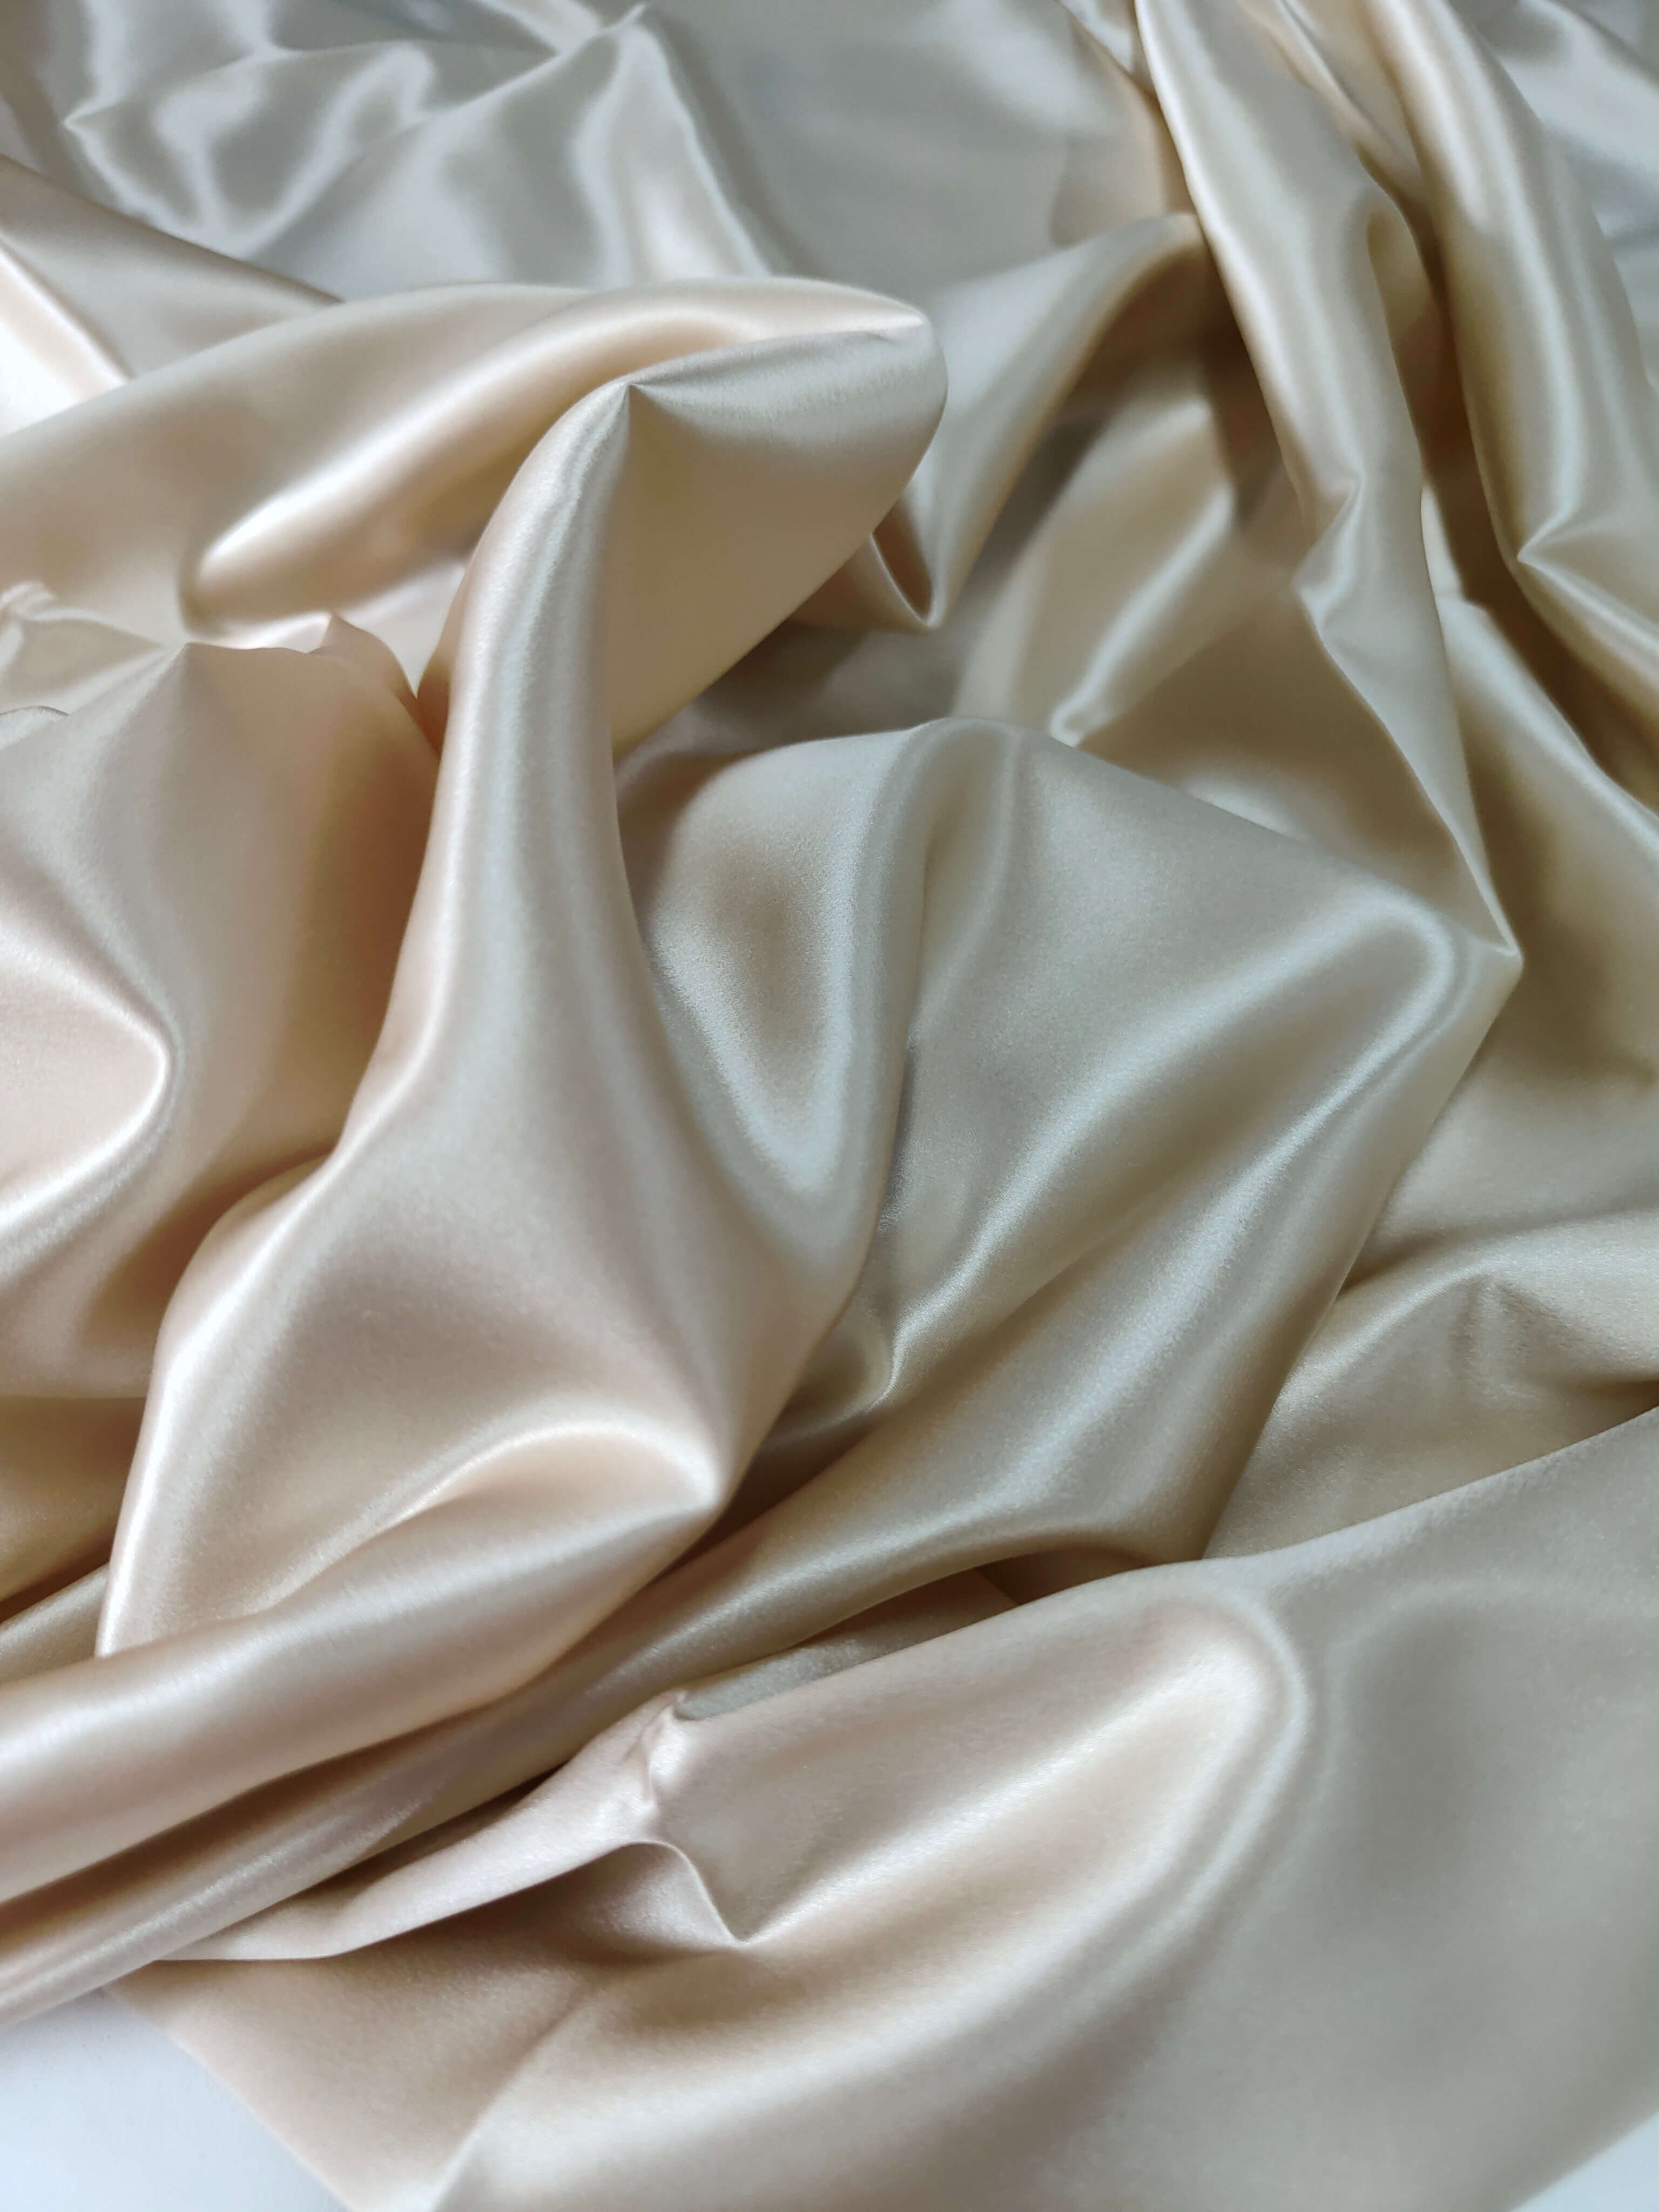 Pure Silk Fabric Wholesale